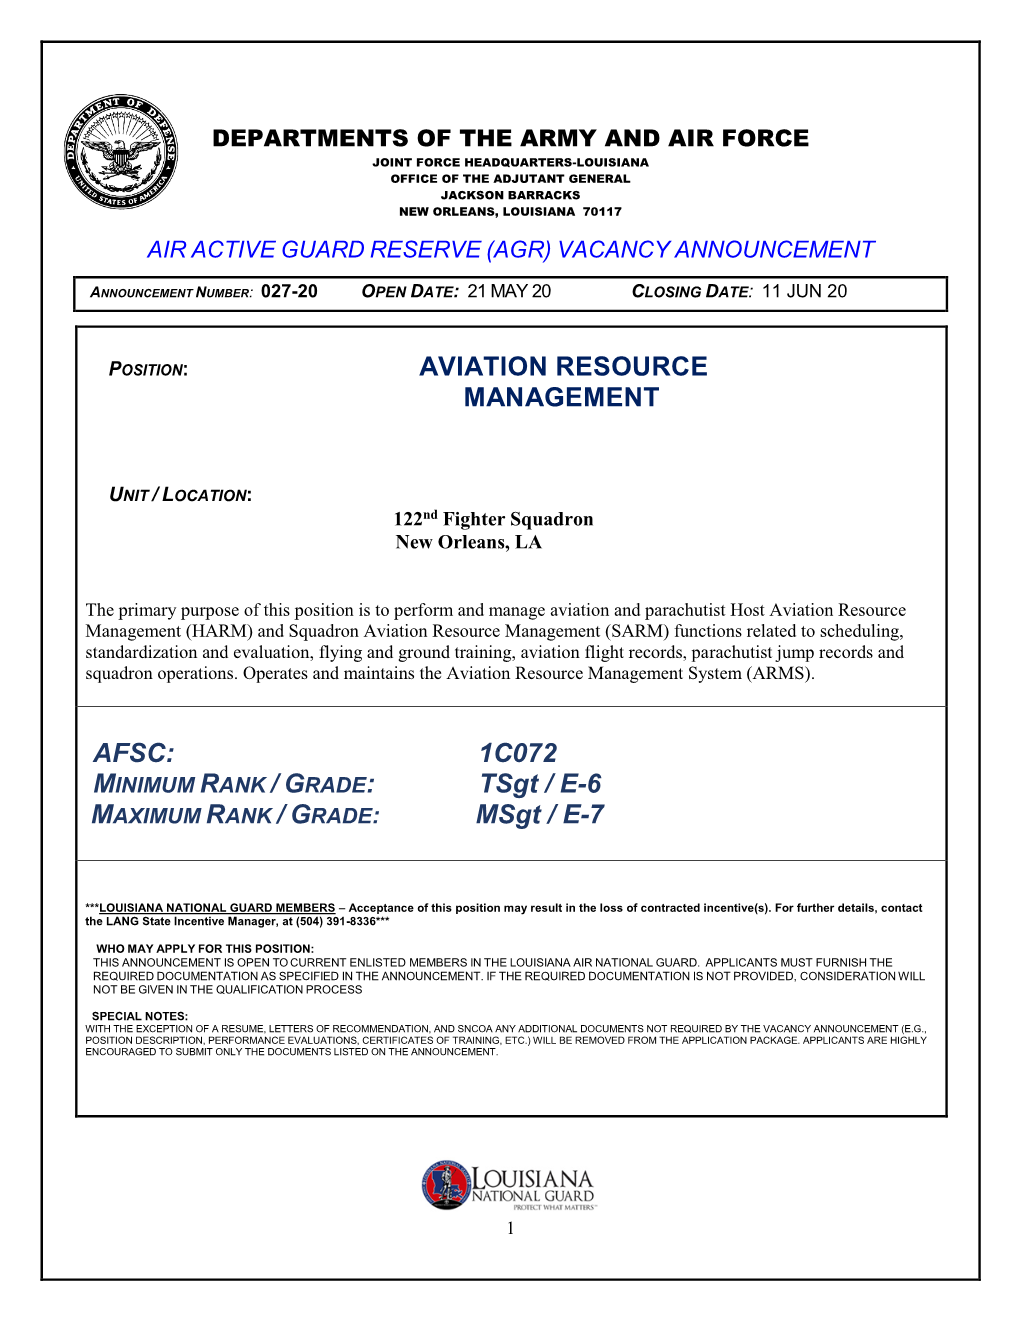 AVIATION RESOURCE MANAGEMENT AFSC: 1C072 Tsgt